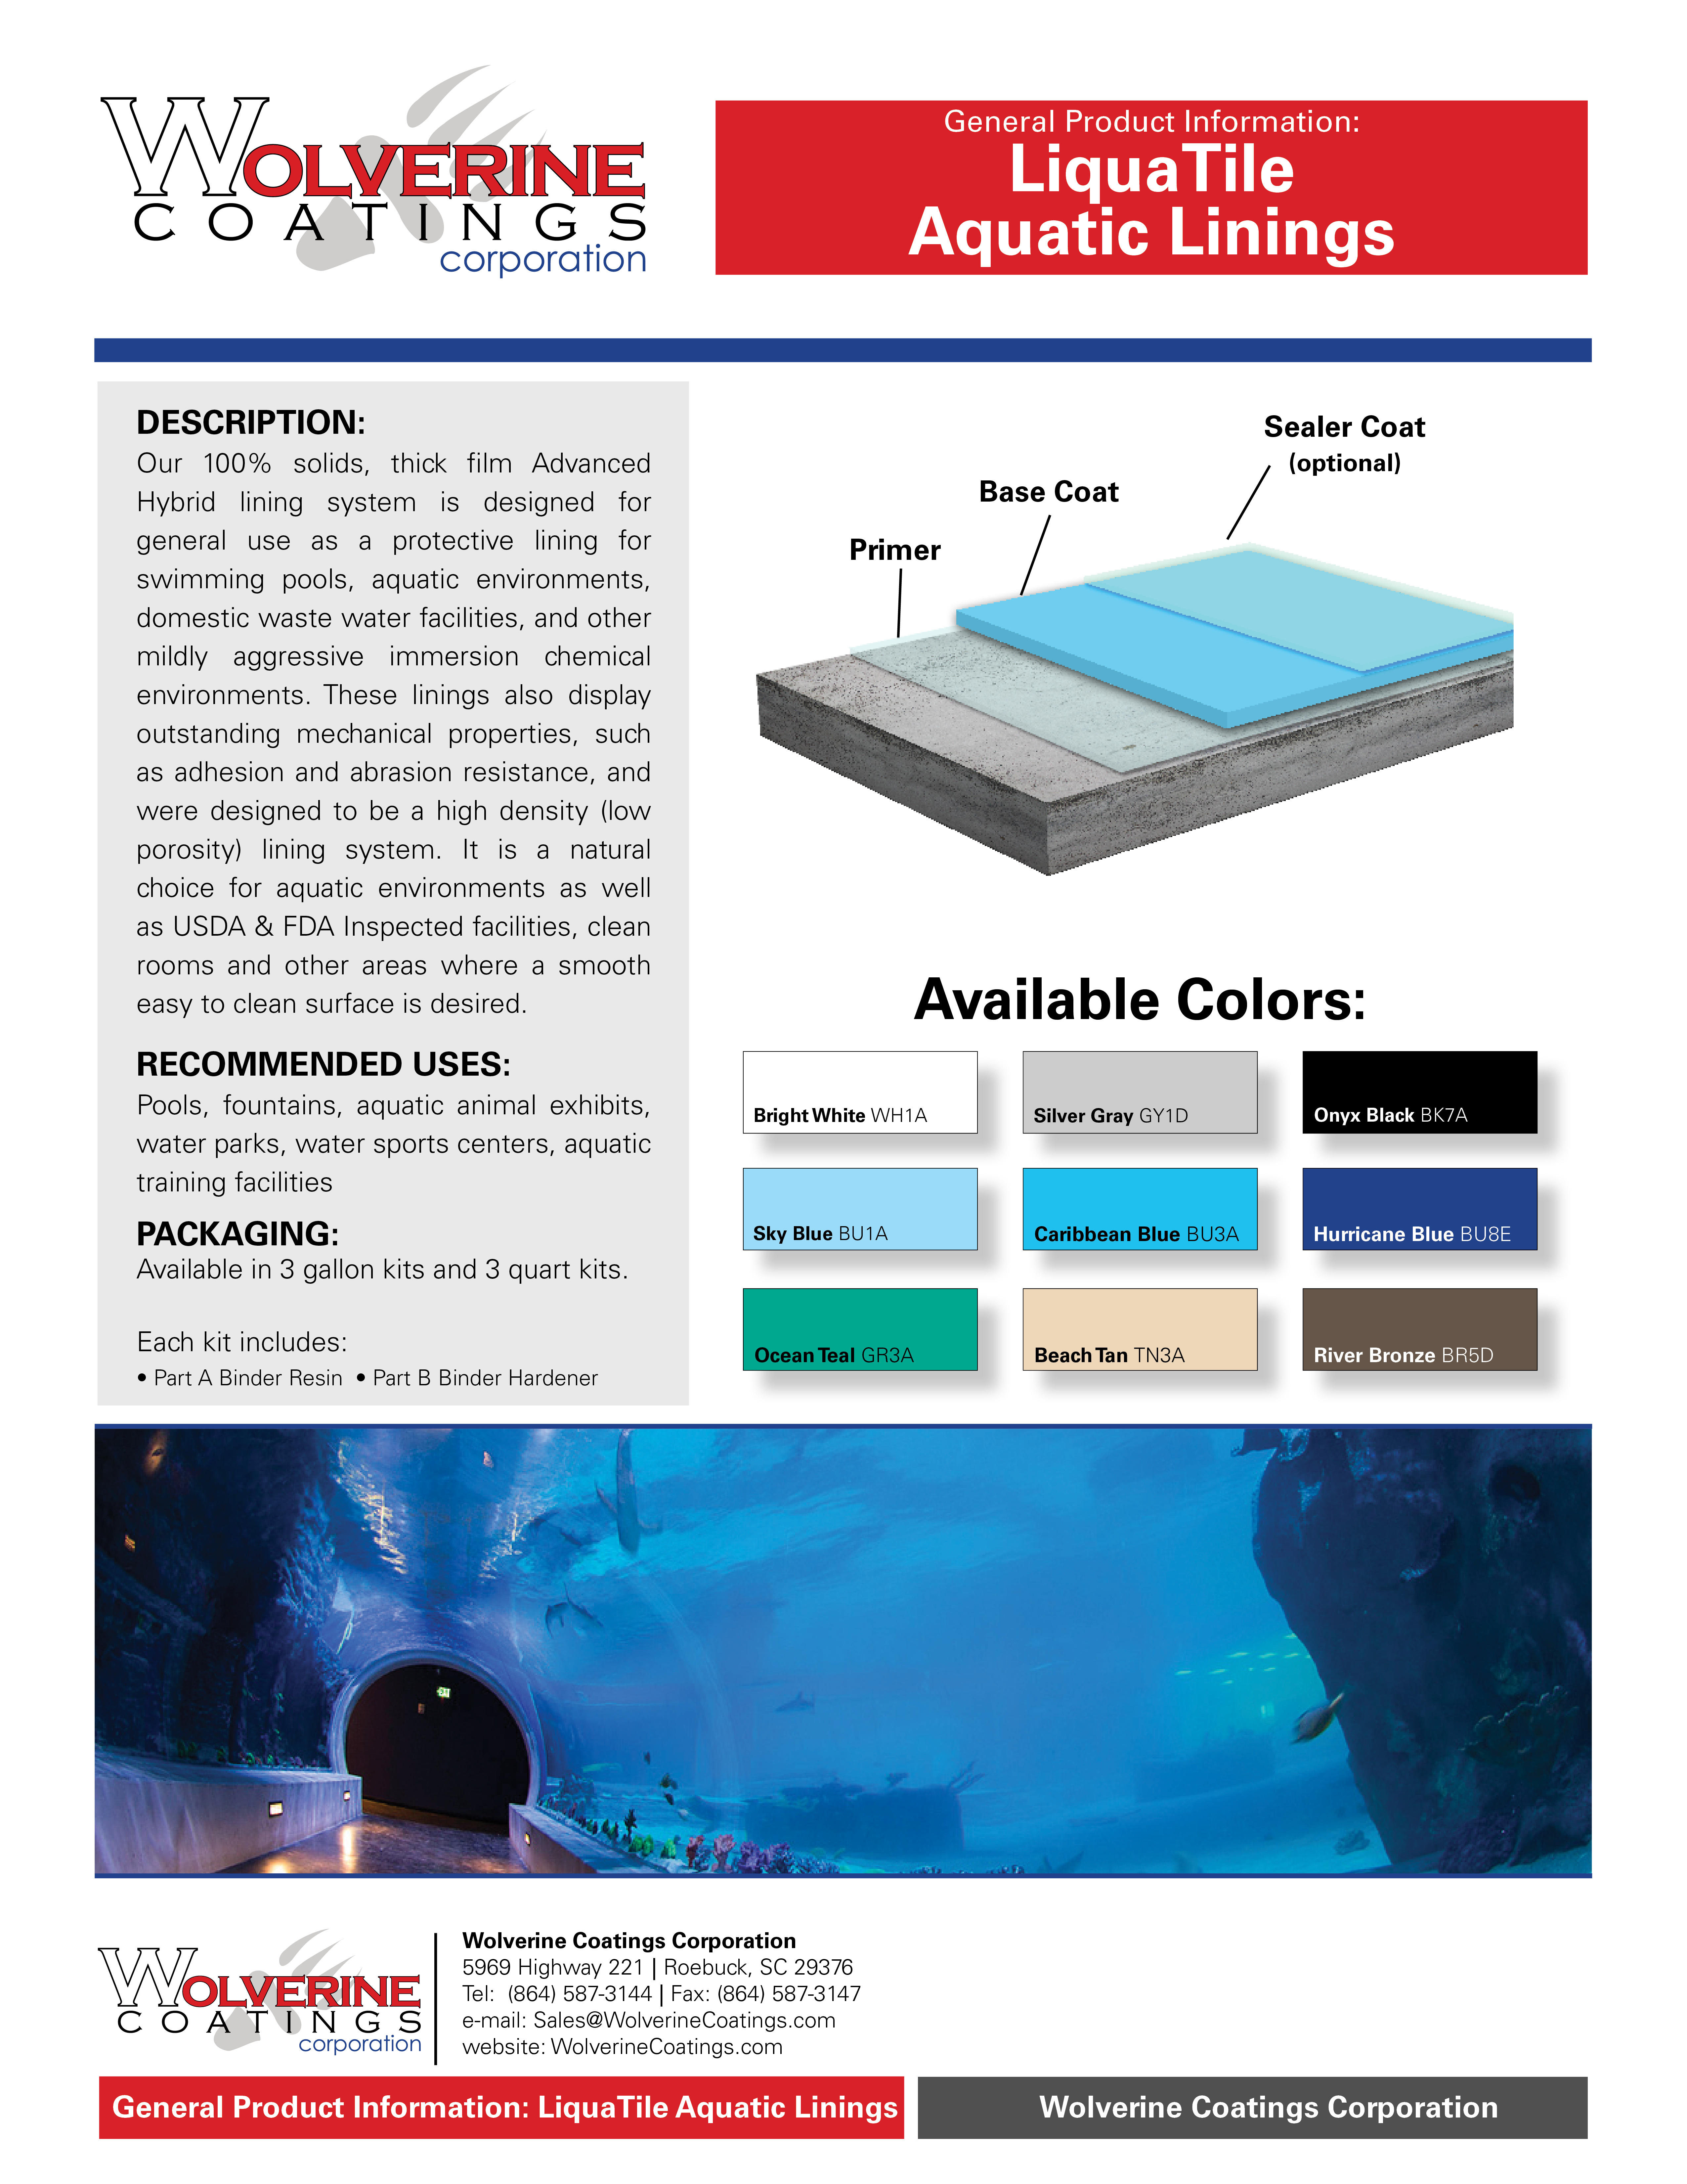 Aquatic Linings - General Product Information - Wolverine Coatings Corporation: Coatings Manufacturer, Spartanburg, SC